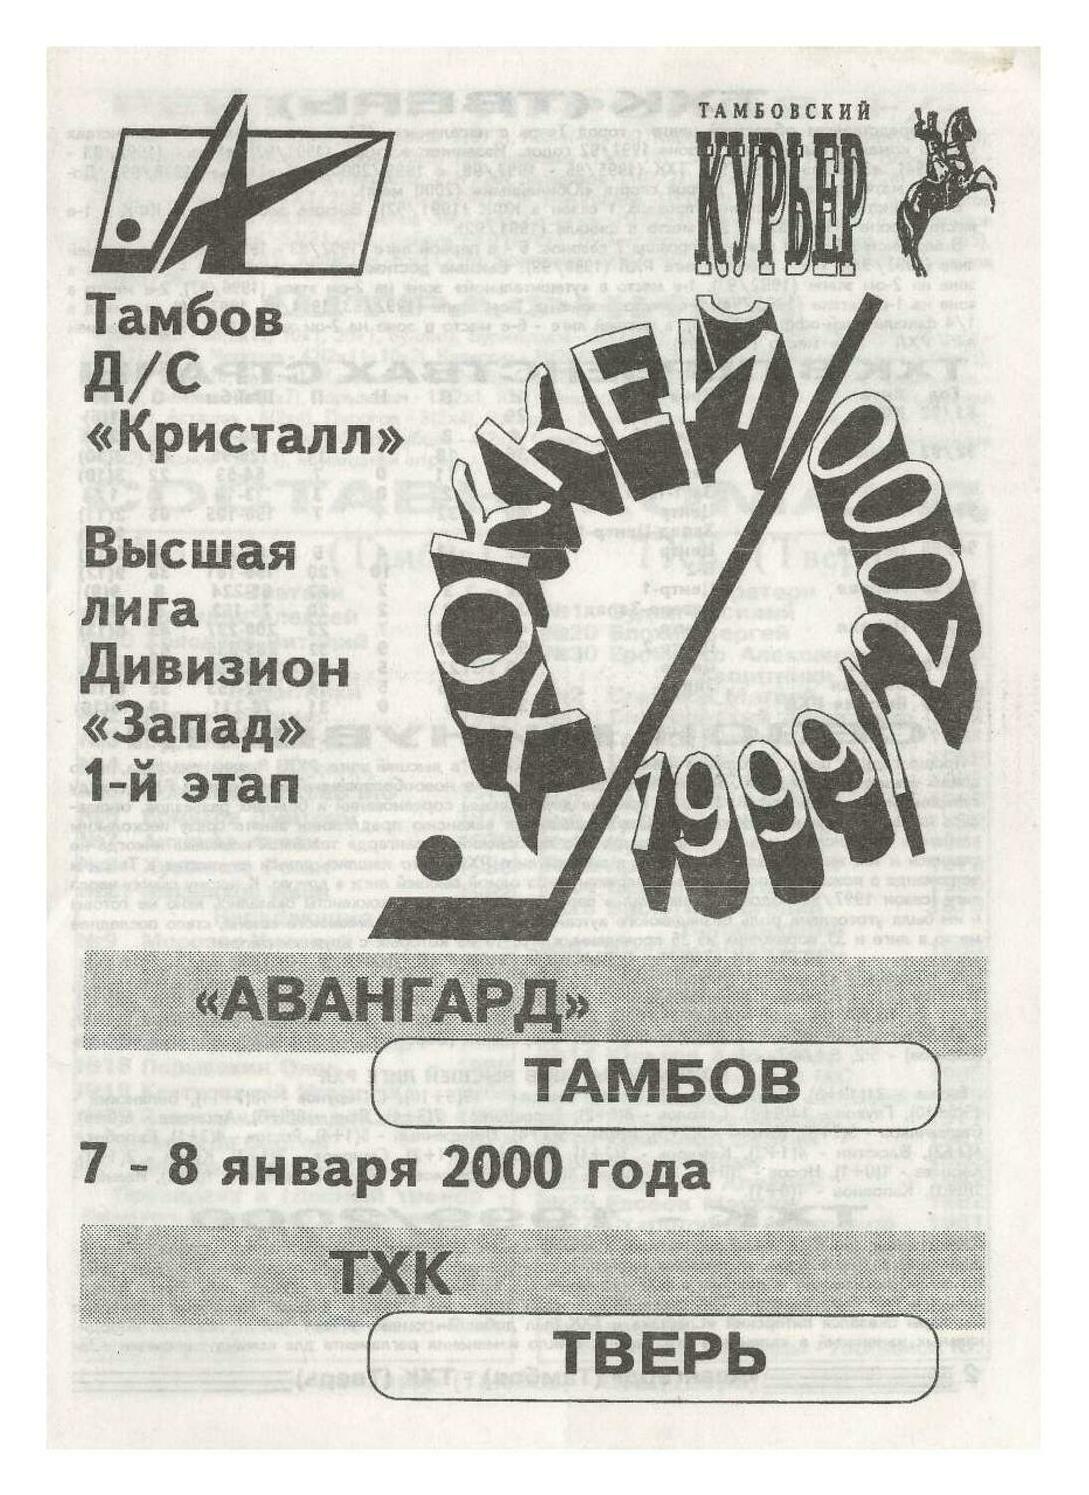 Программа "Авангард" Тамбов - ТХК Тверь №52 от 07-08.01.2000г.